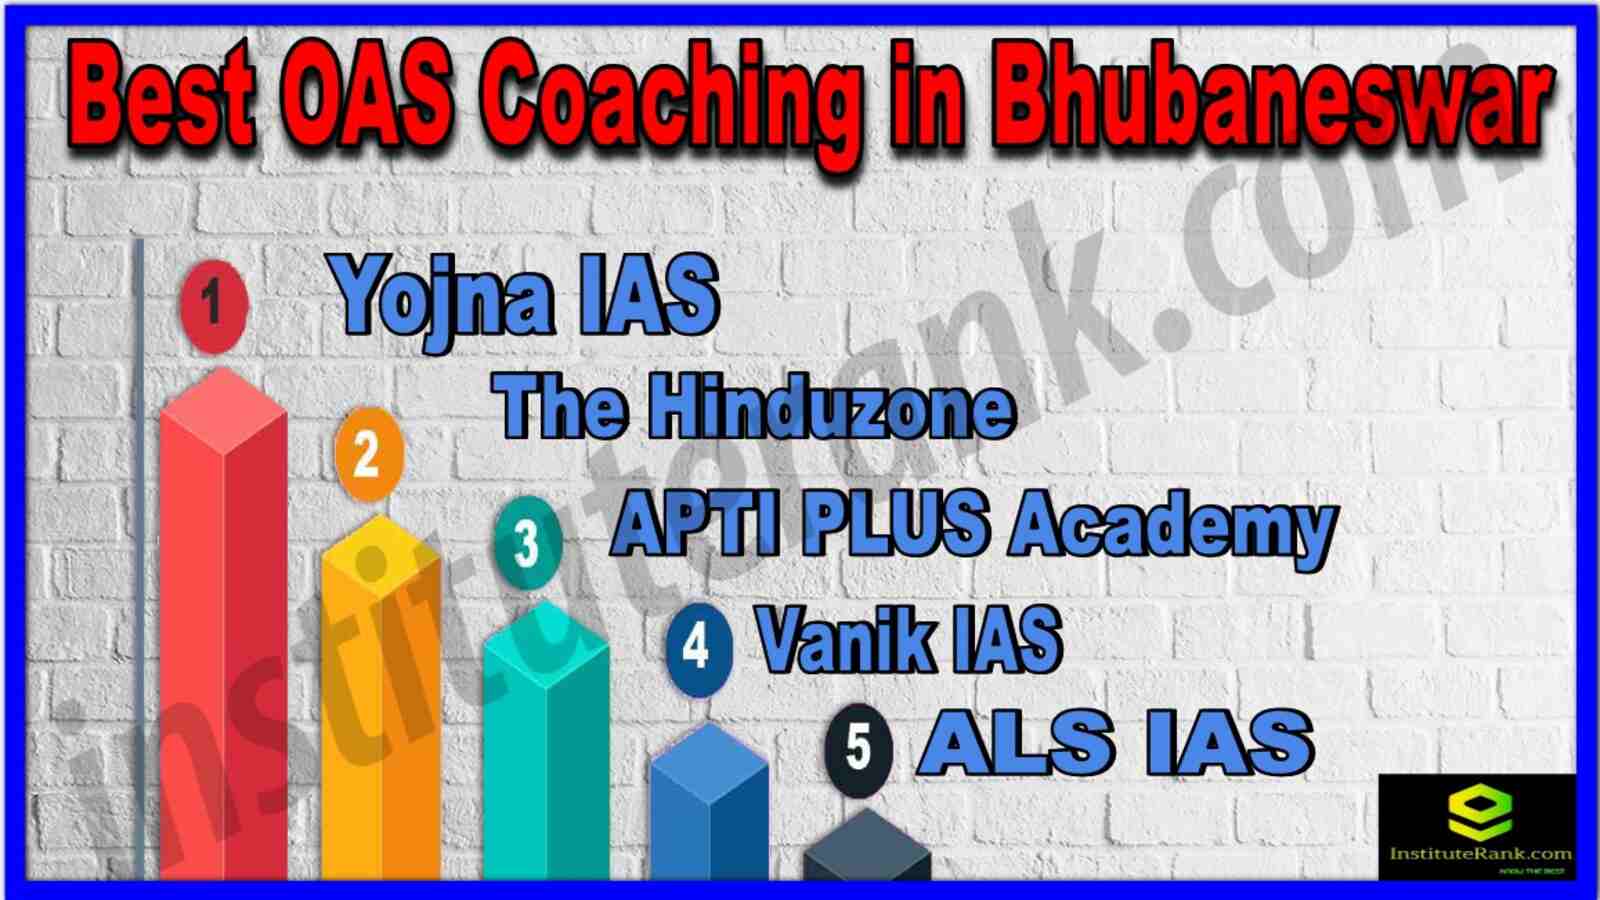 Best OAS Coaching in Bhubaneswar